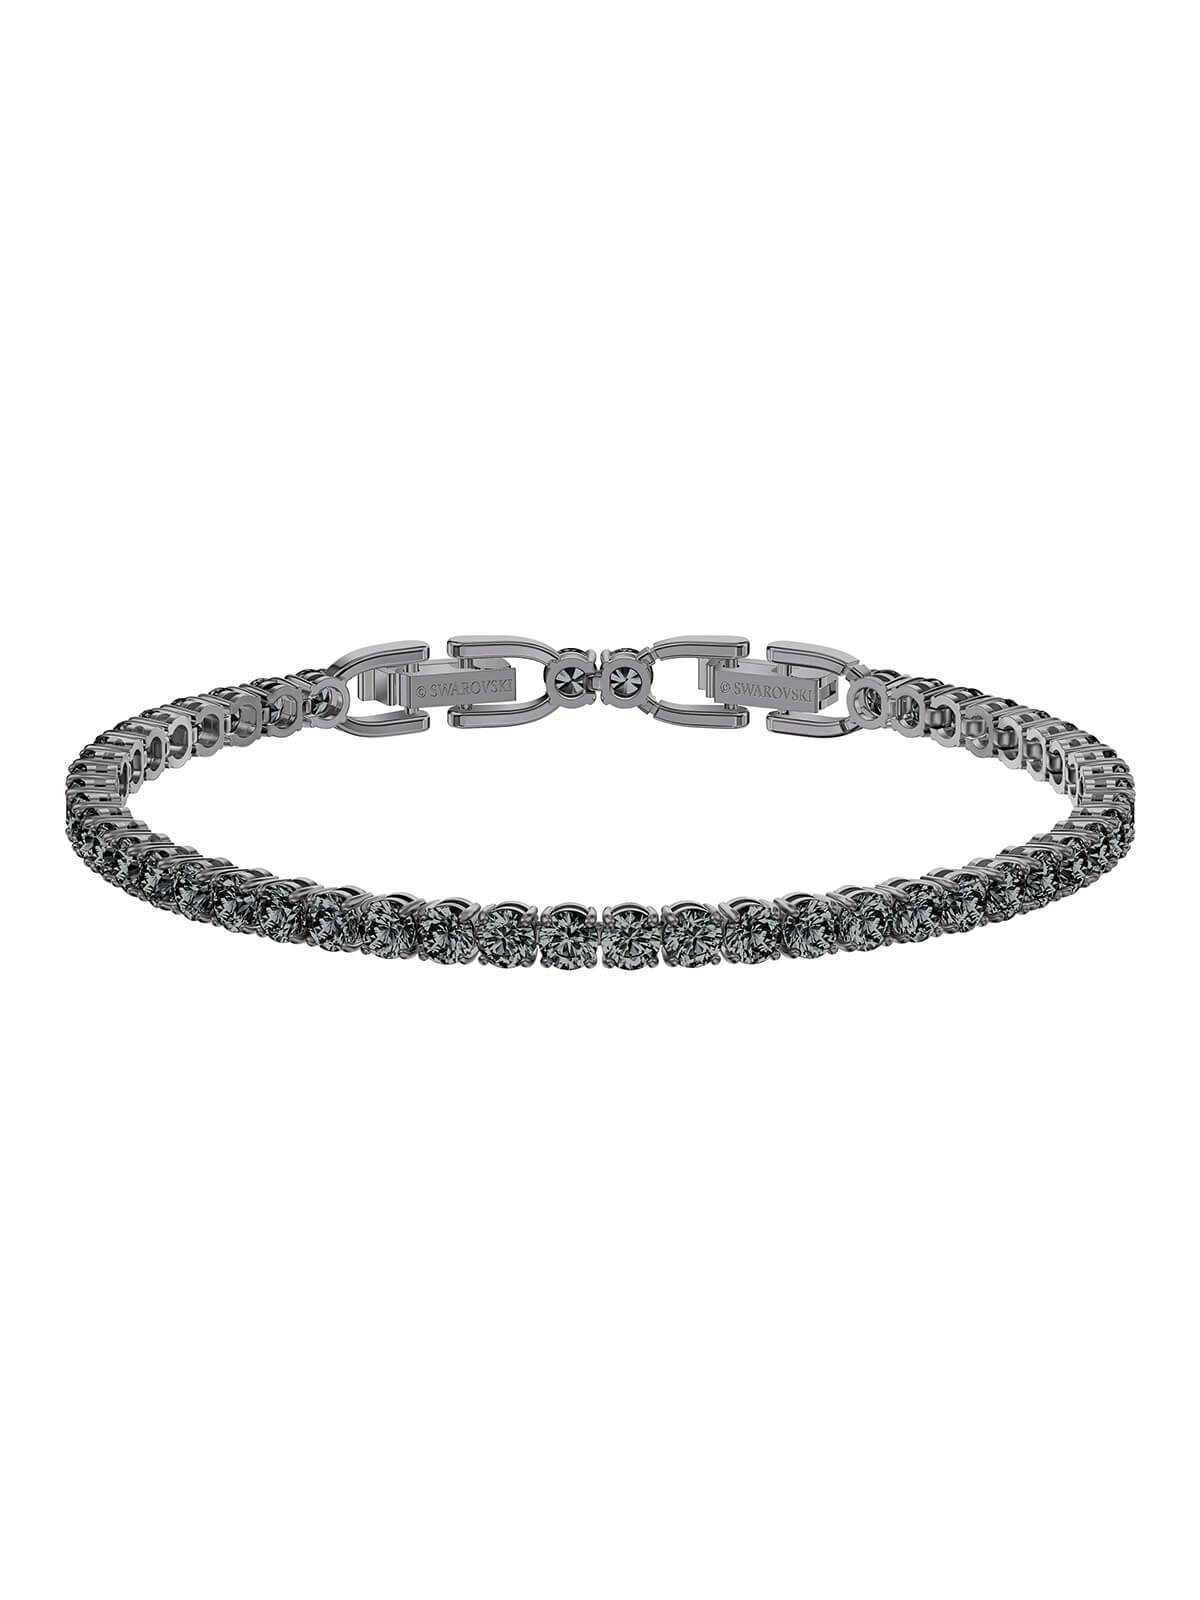 Black Crystal Bracelet – Pretty Shiny Beads